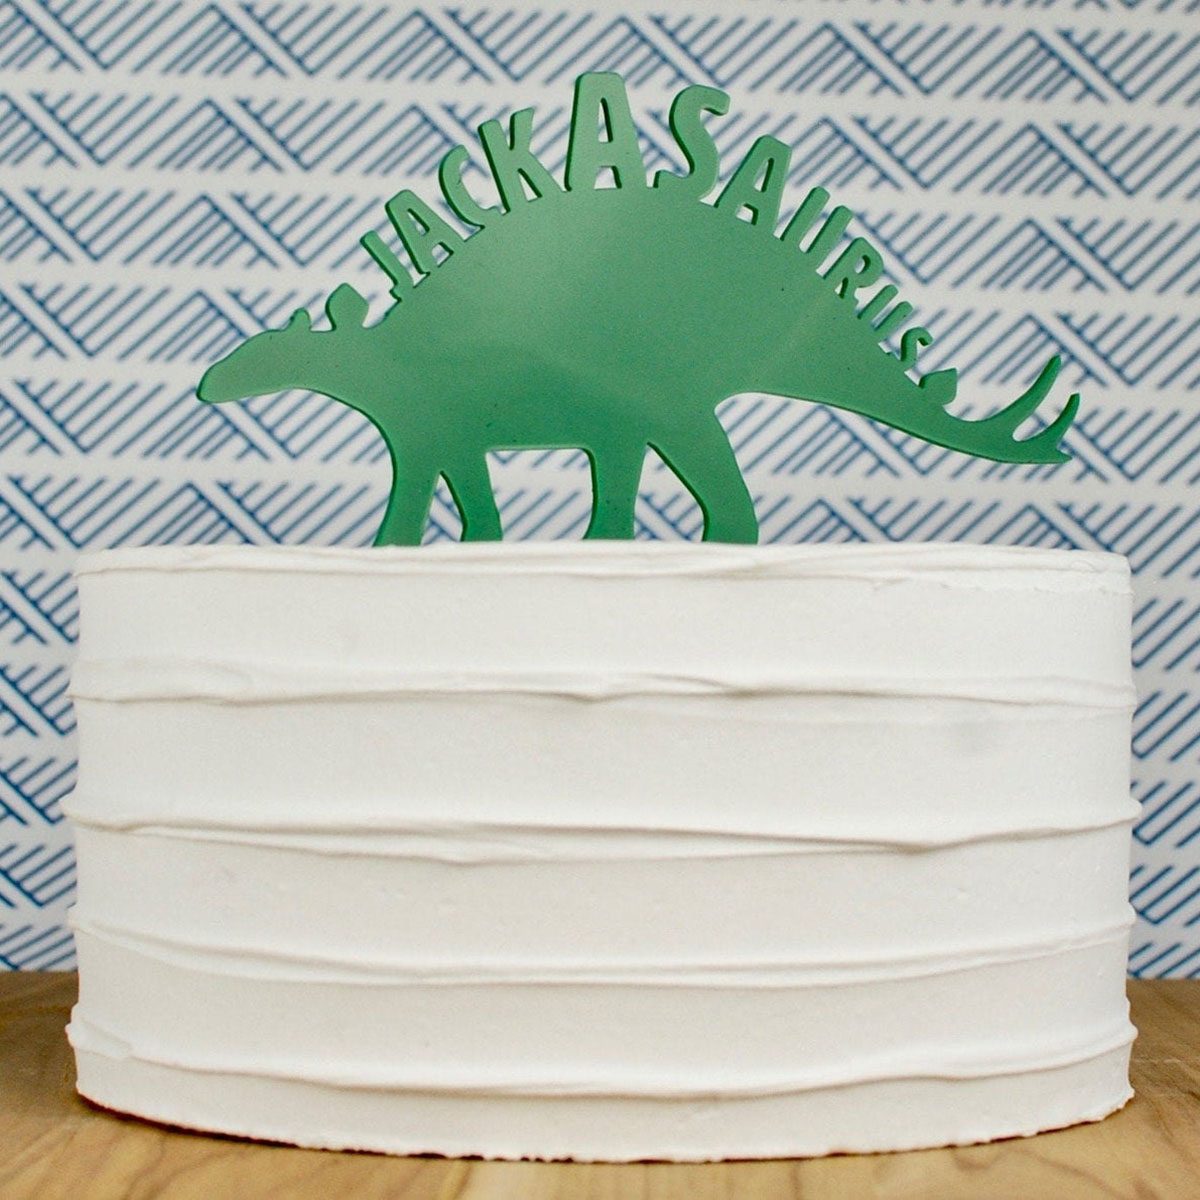 10 Dinosaur Jurassic world party favors.Creative,DIY Boys Girls